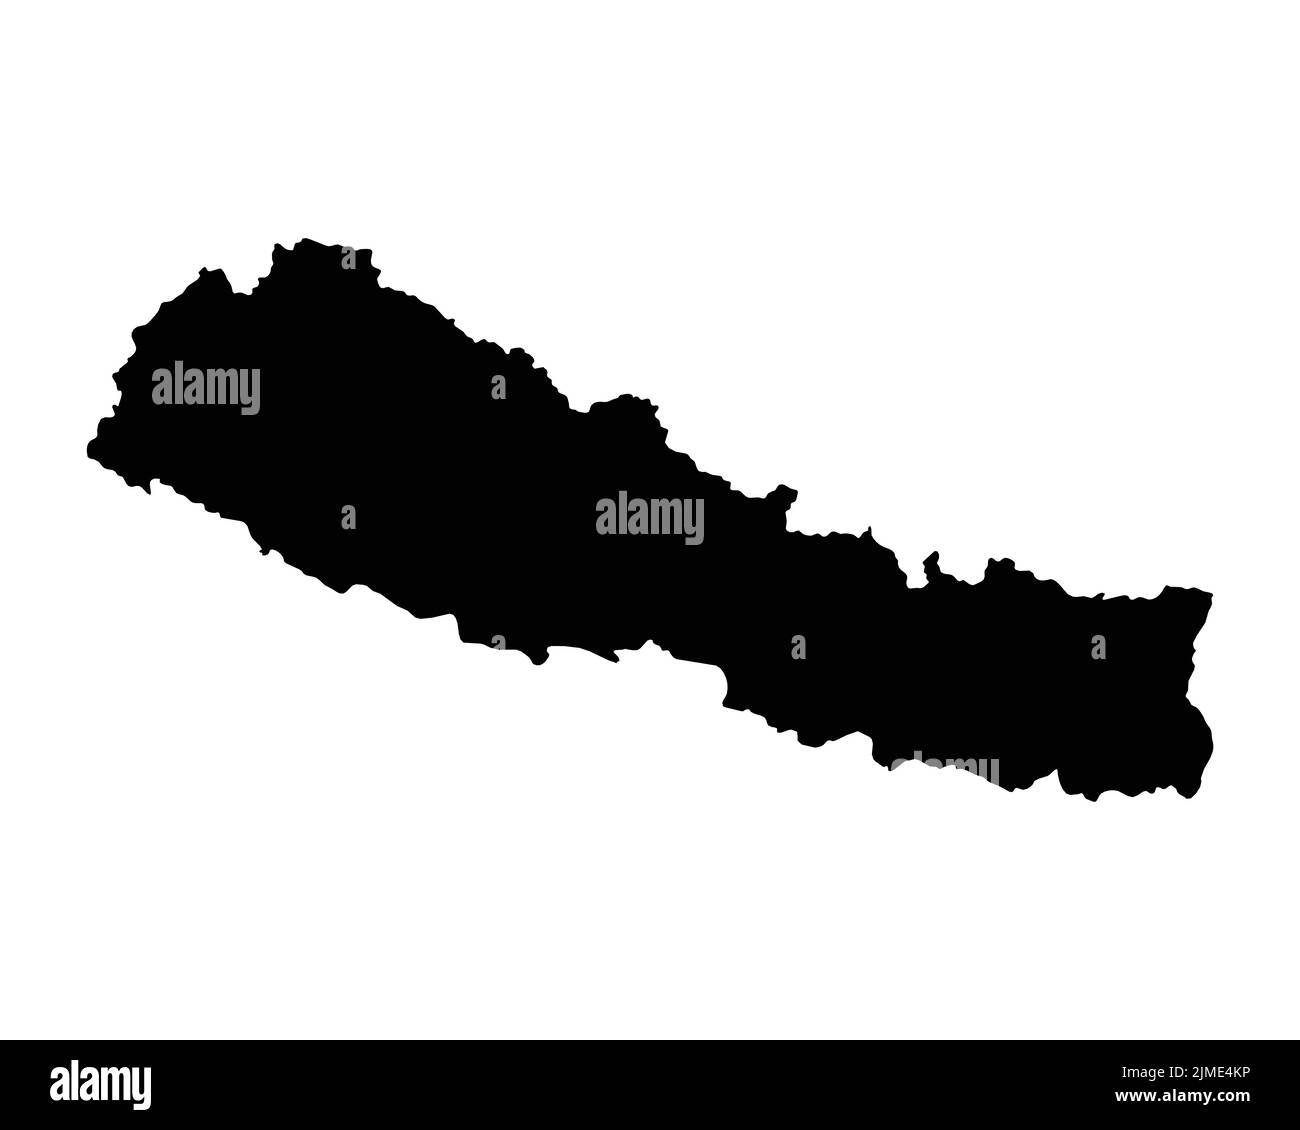 Mappa del Nepal. Mappa del Paese Nepalese. Bianco e nero Nepalese National Nation Outline Geography Border Boundary Shape Territory Vector Illustration EPS clip Illustrazione Vettoriale